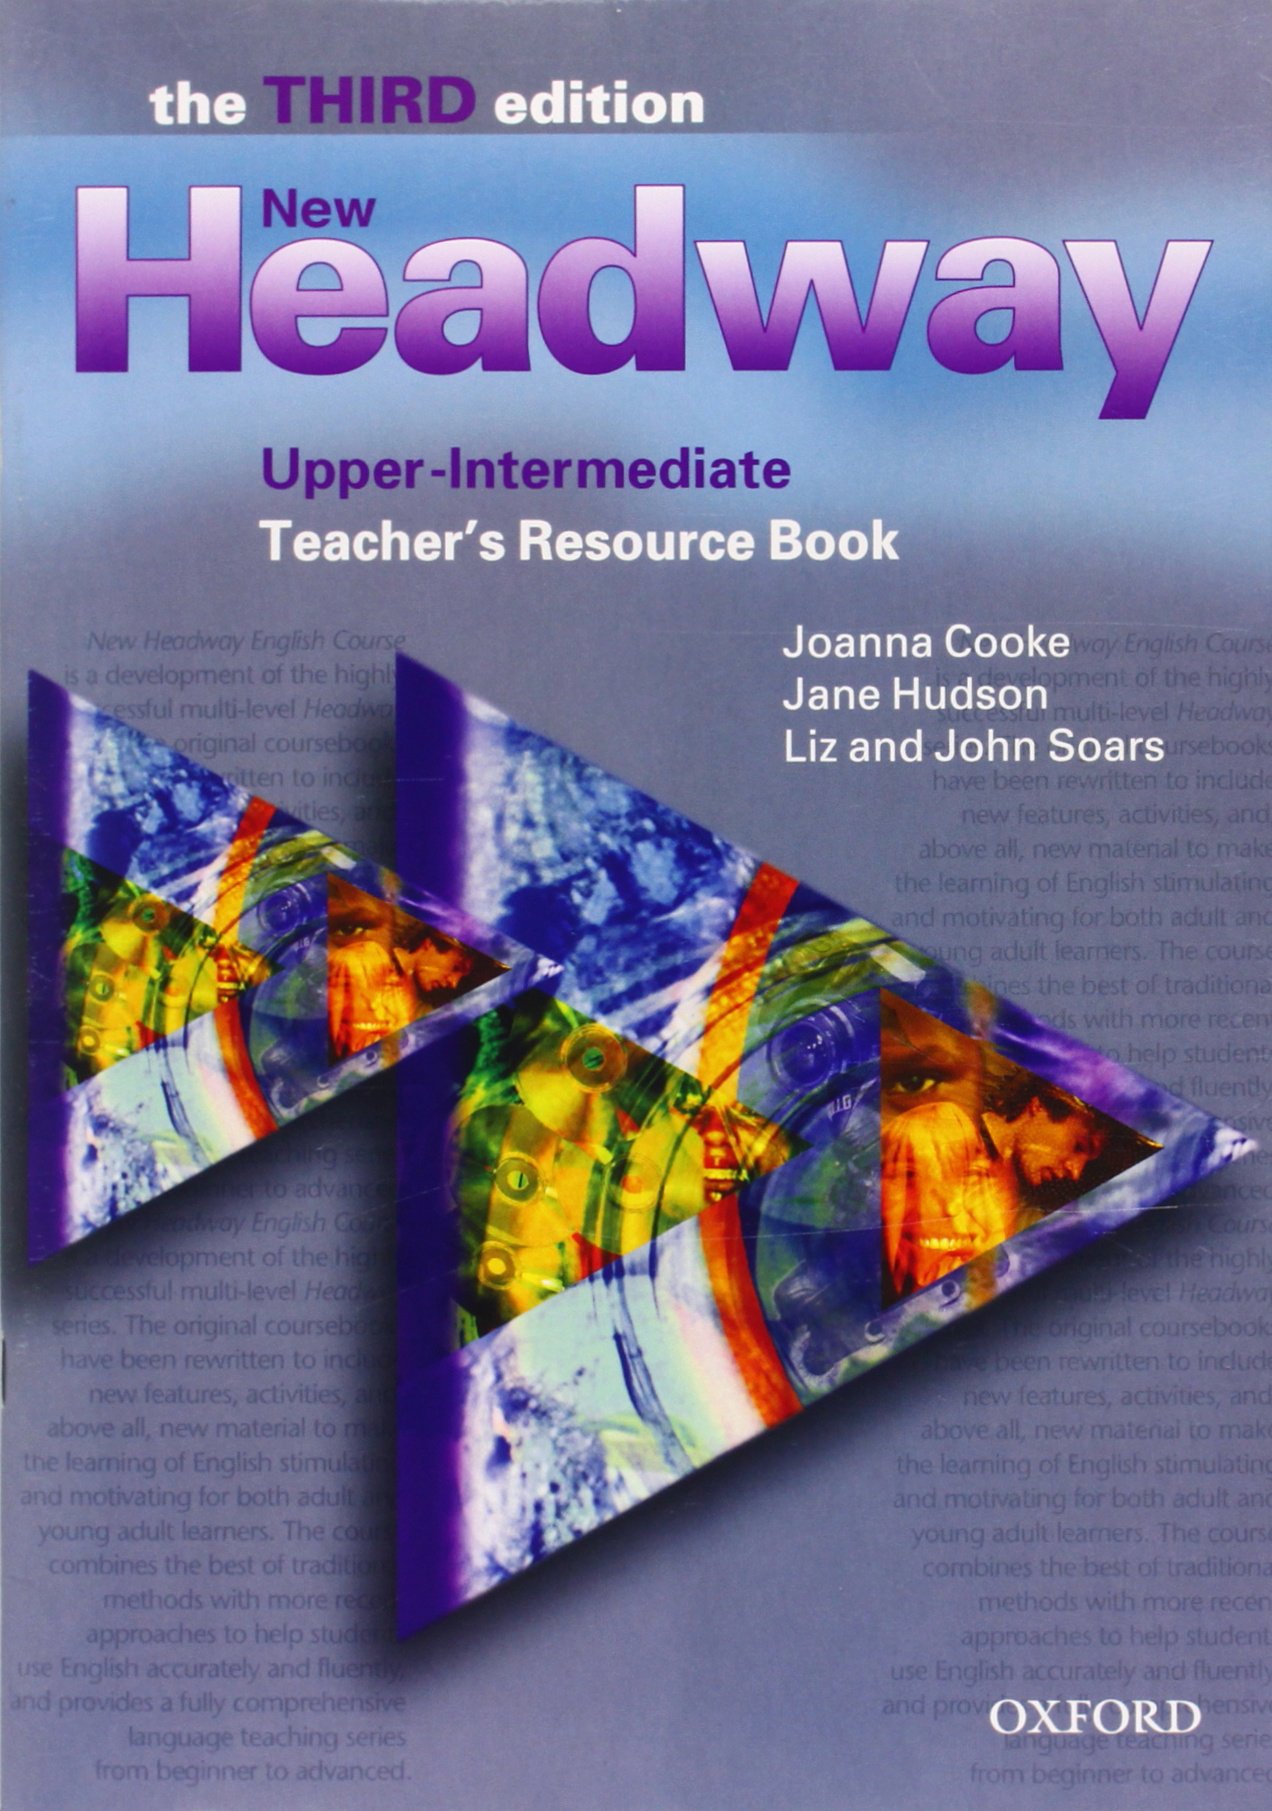 NEW HEADWAY UPPER-INTERMEDIATE 3rd ED Teacher's Resource Book